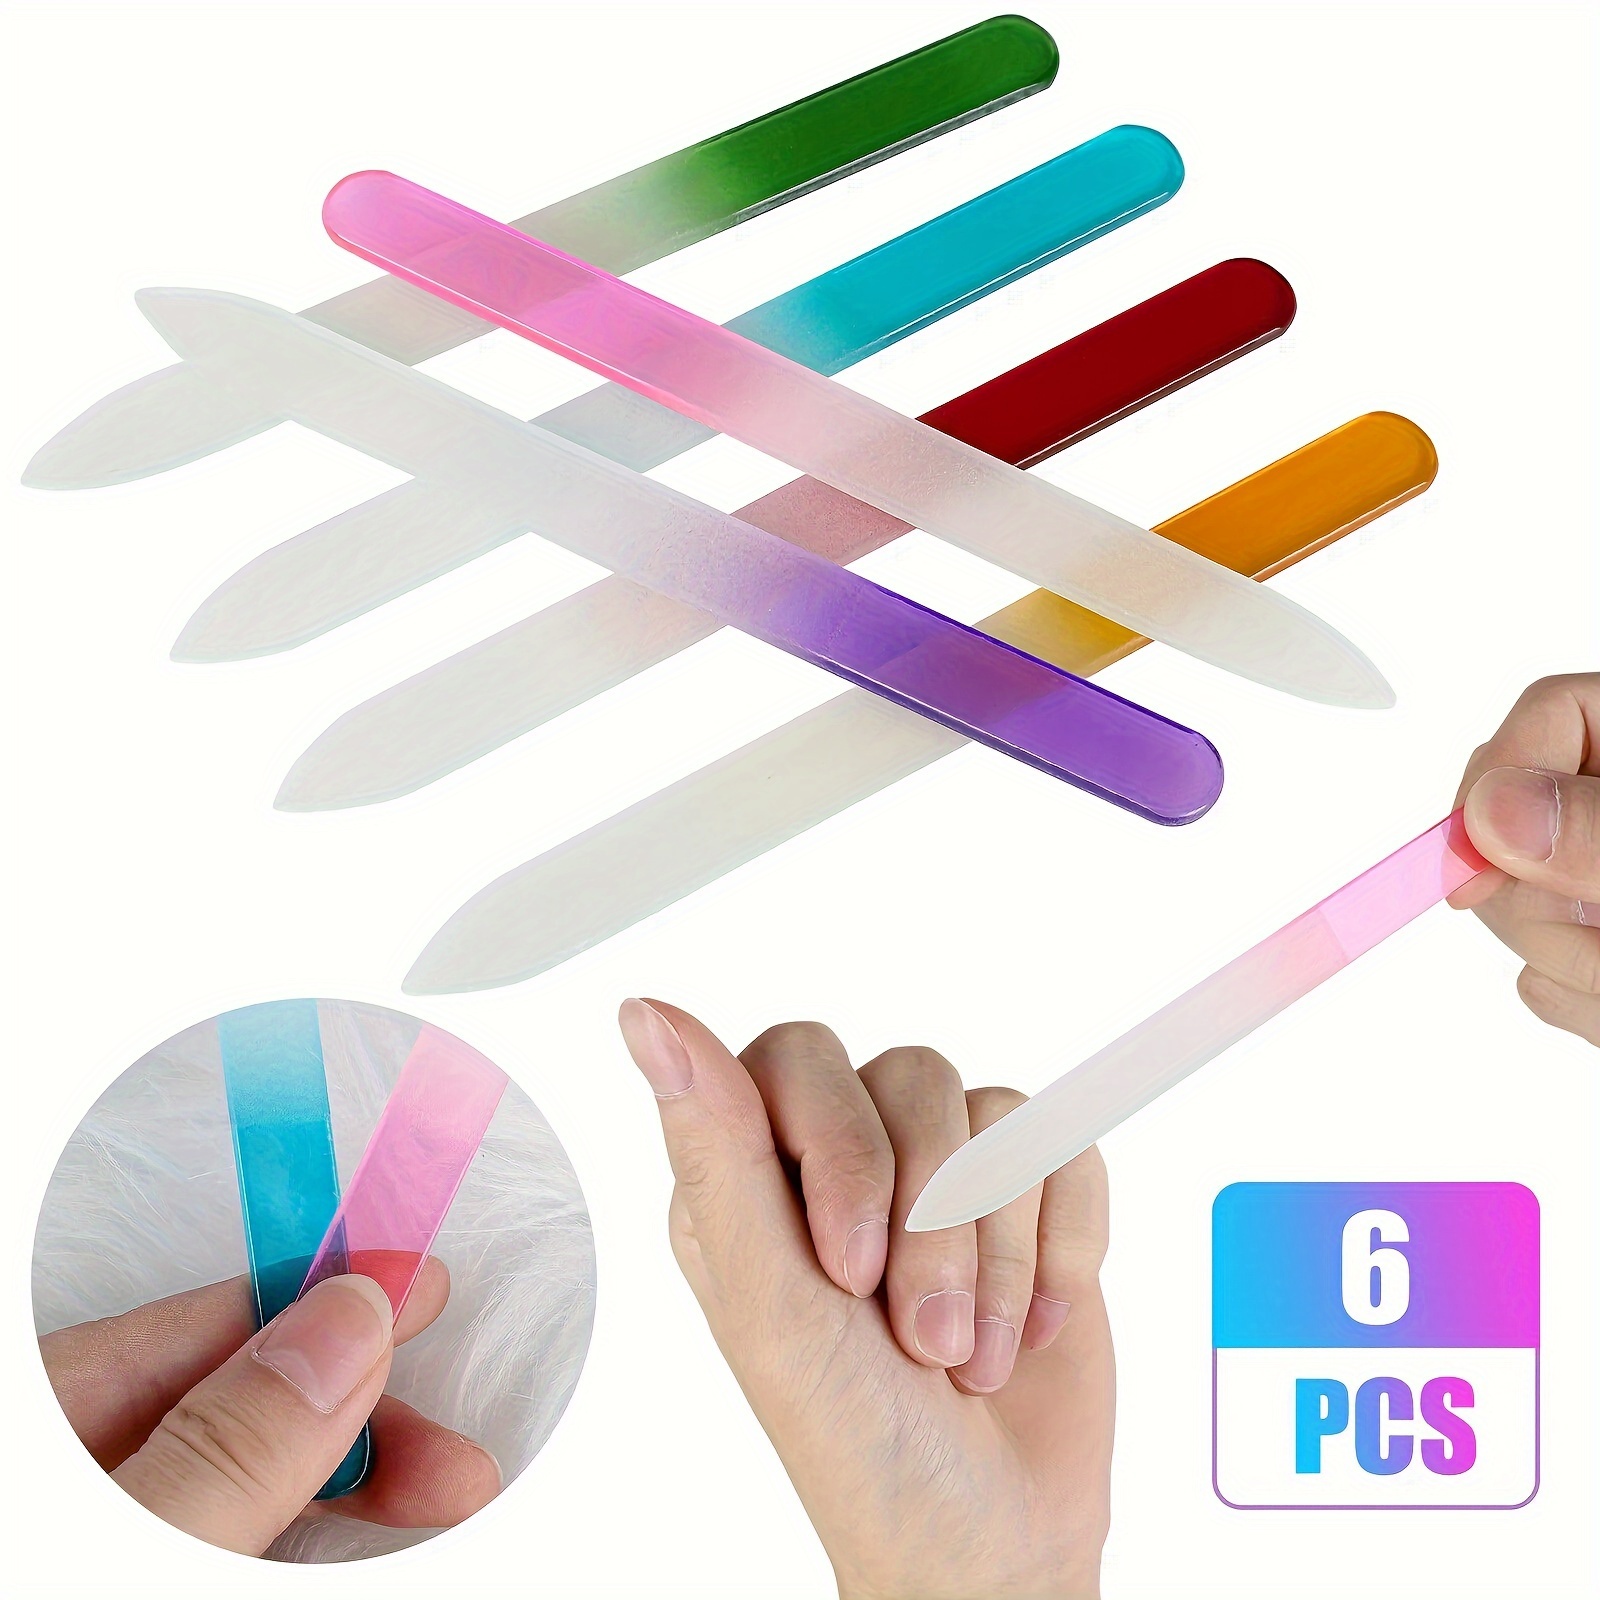 

6pcs/set Double-sided Glass Finger Nail Files, Manicure Pedicure Fingernail File